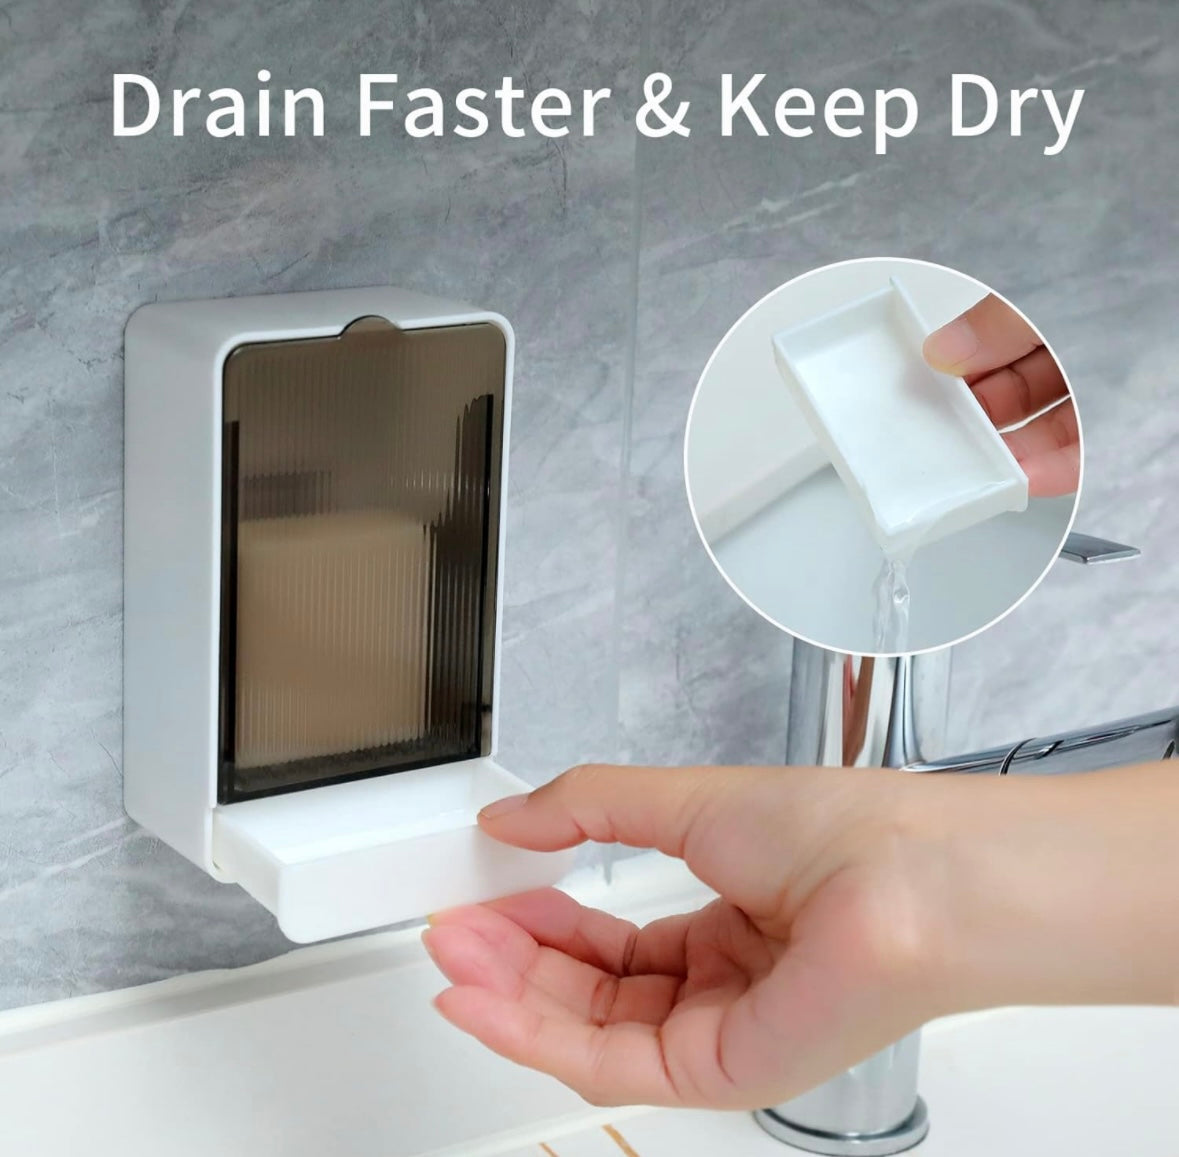 Wall mounted soap drainage dish